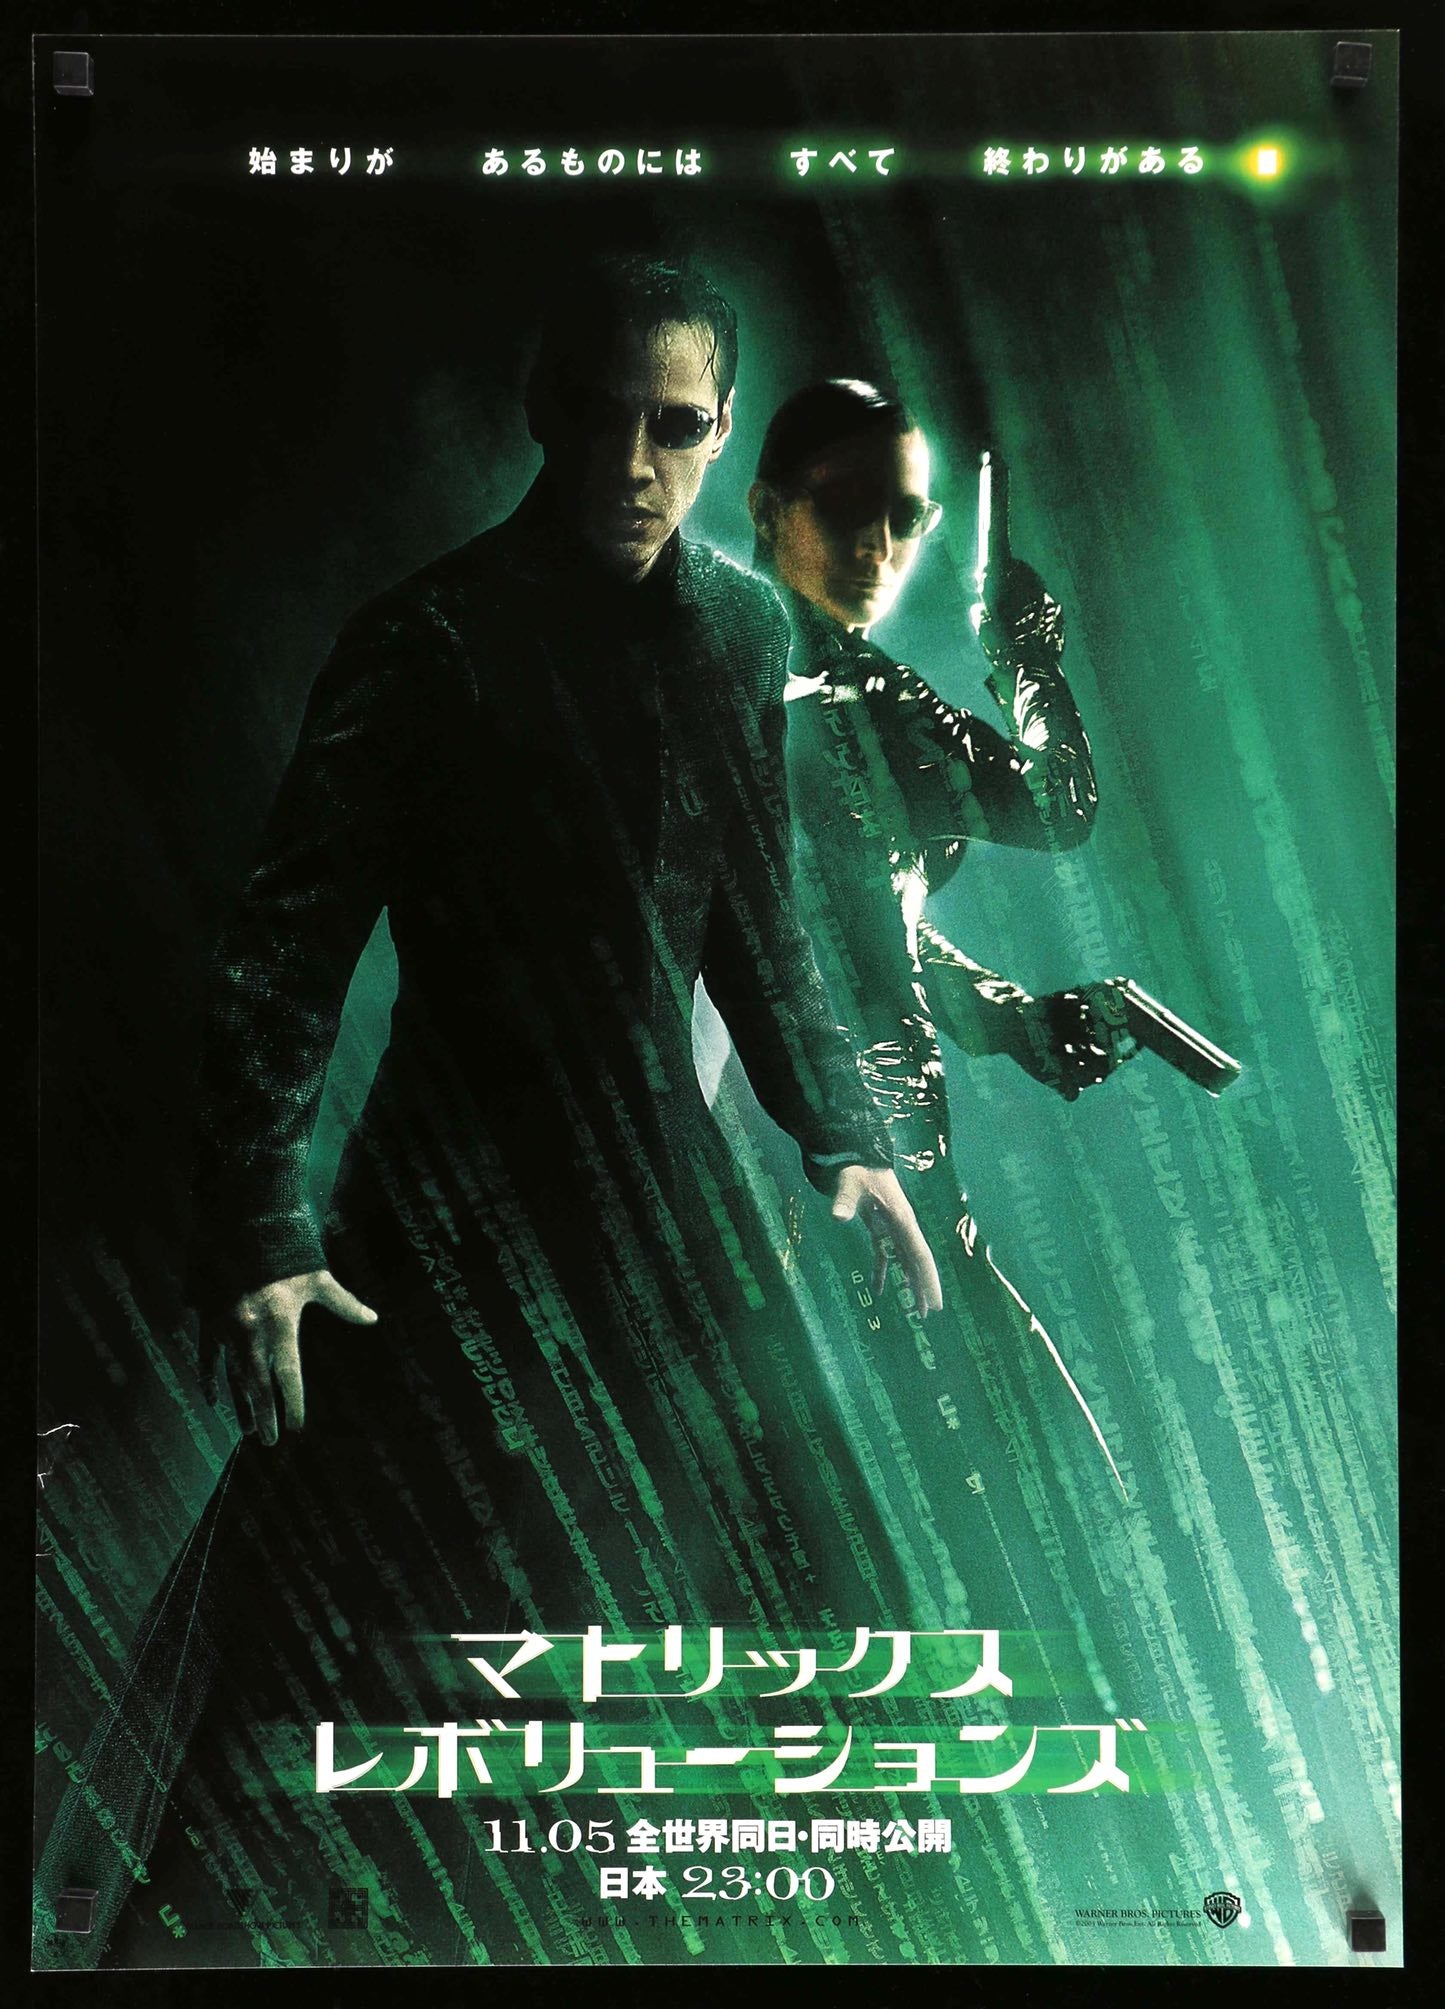 Matrix Revolutions (2003) original movie poster for sale at Original Film Art